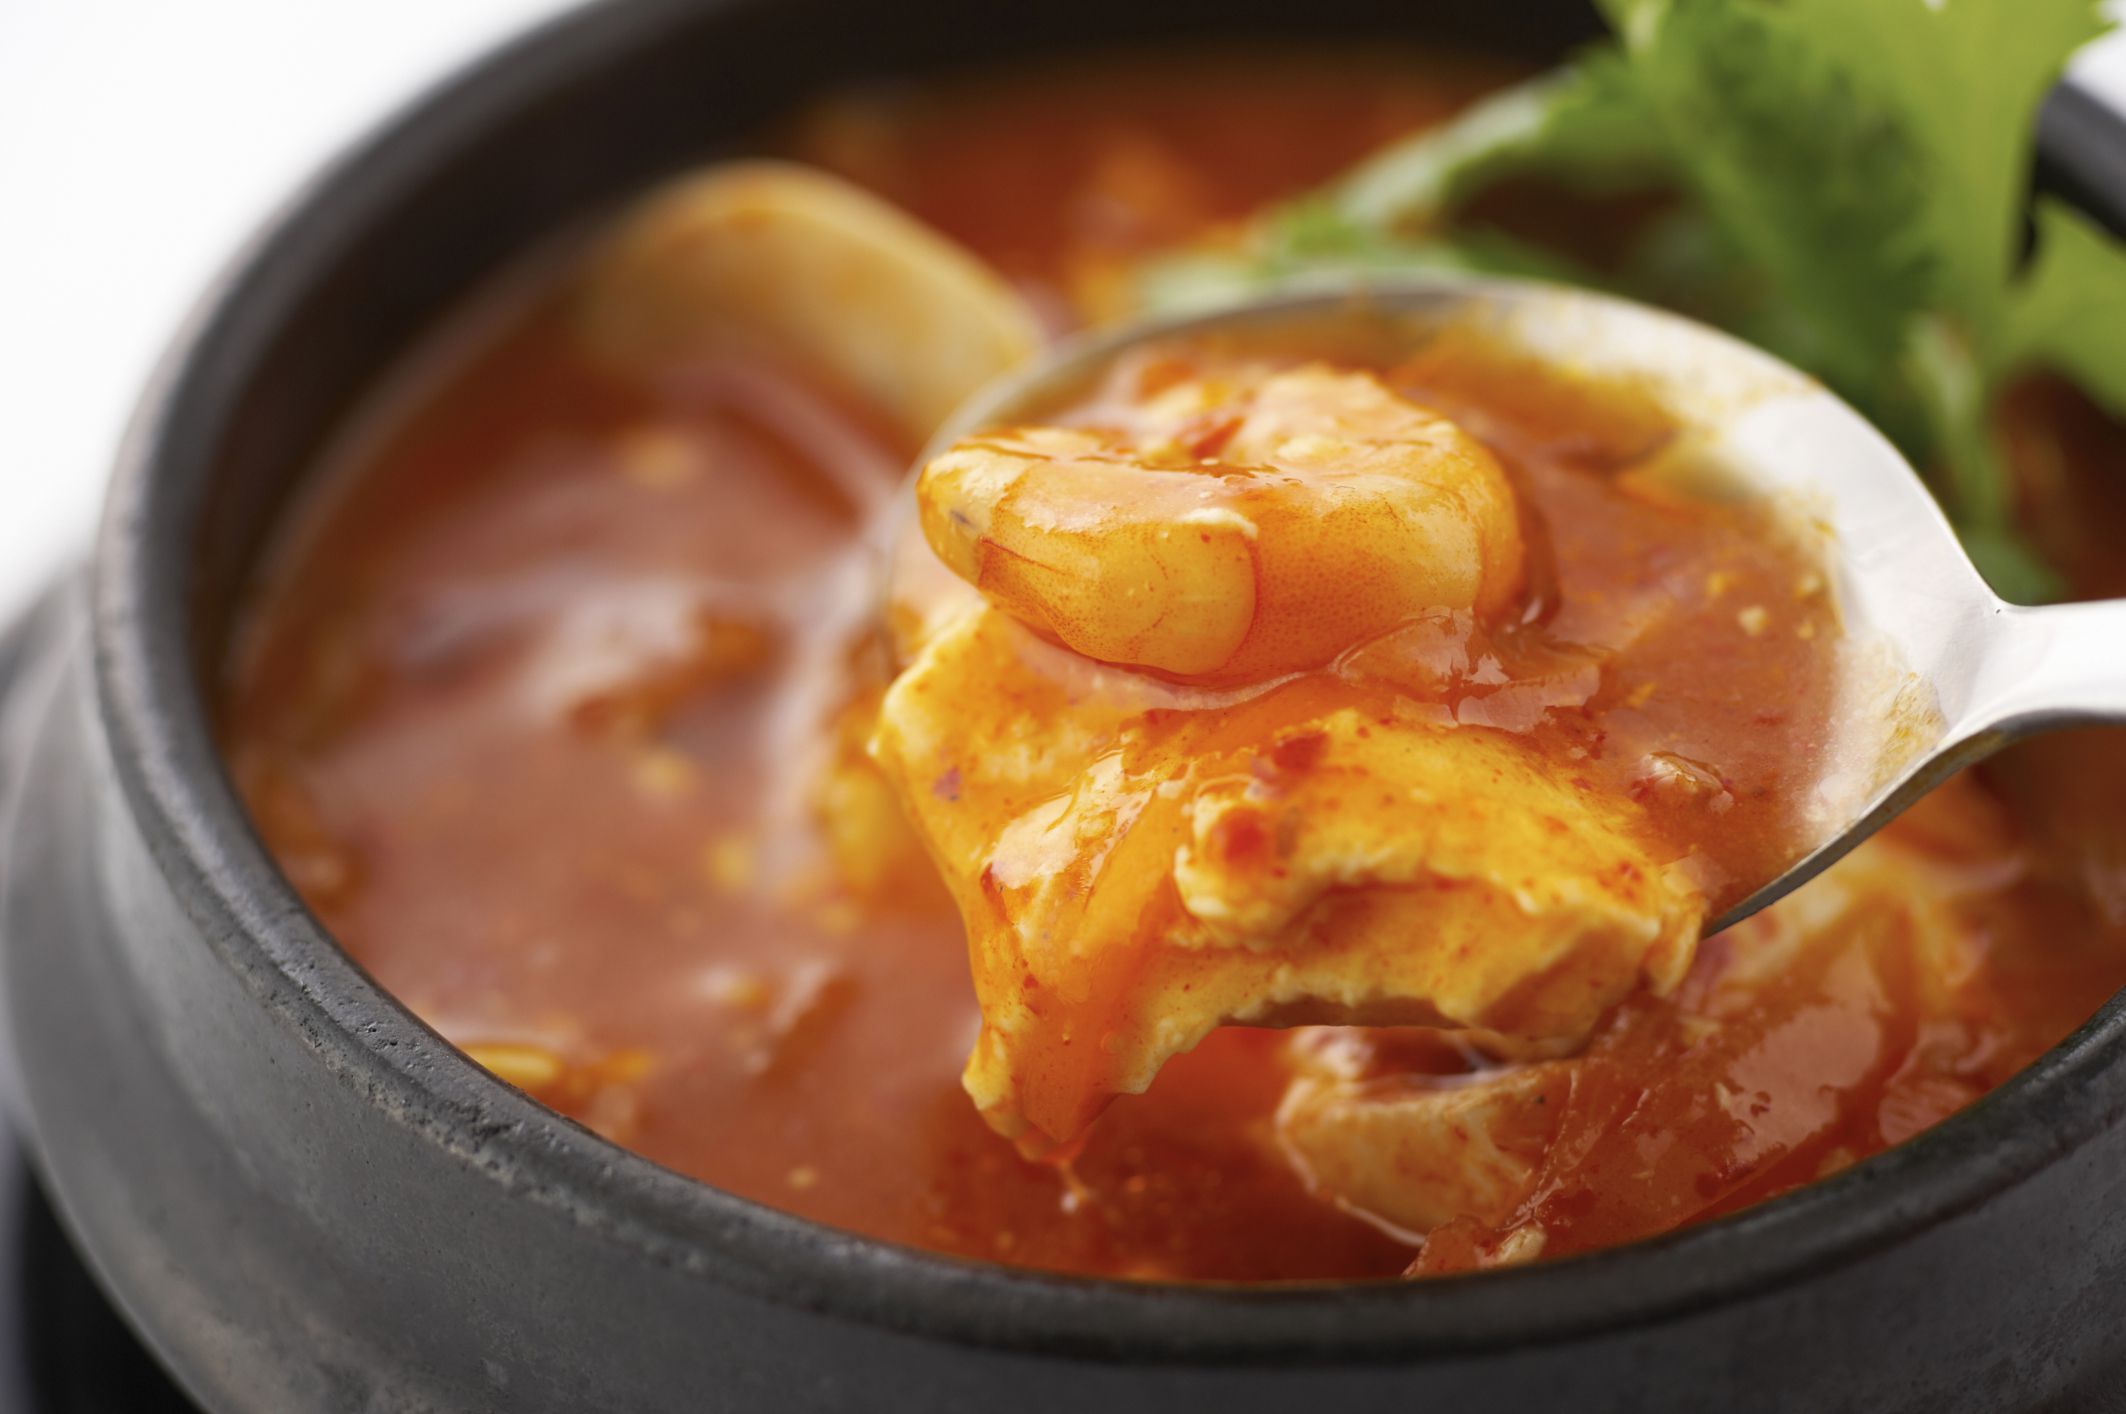 Healthy Low-Calorie Korean Food Choices